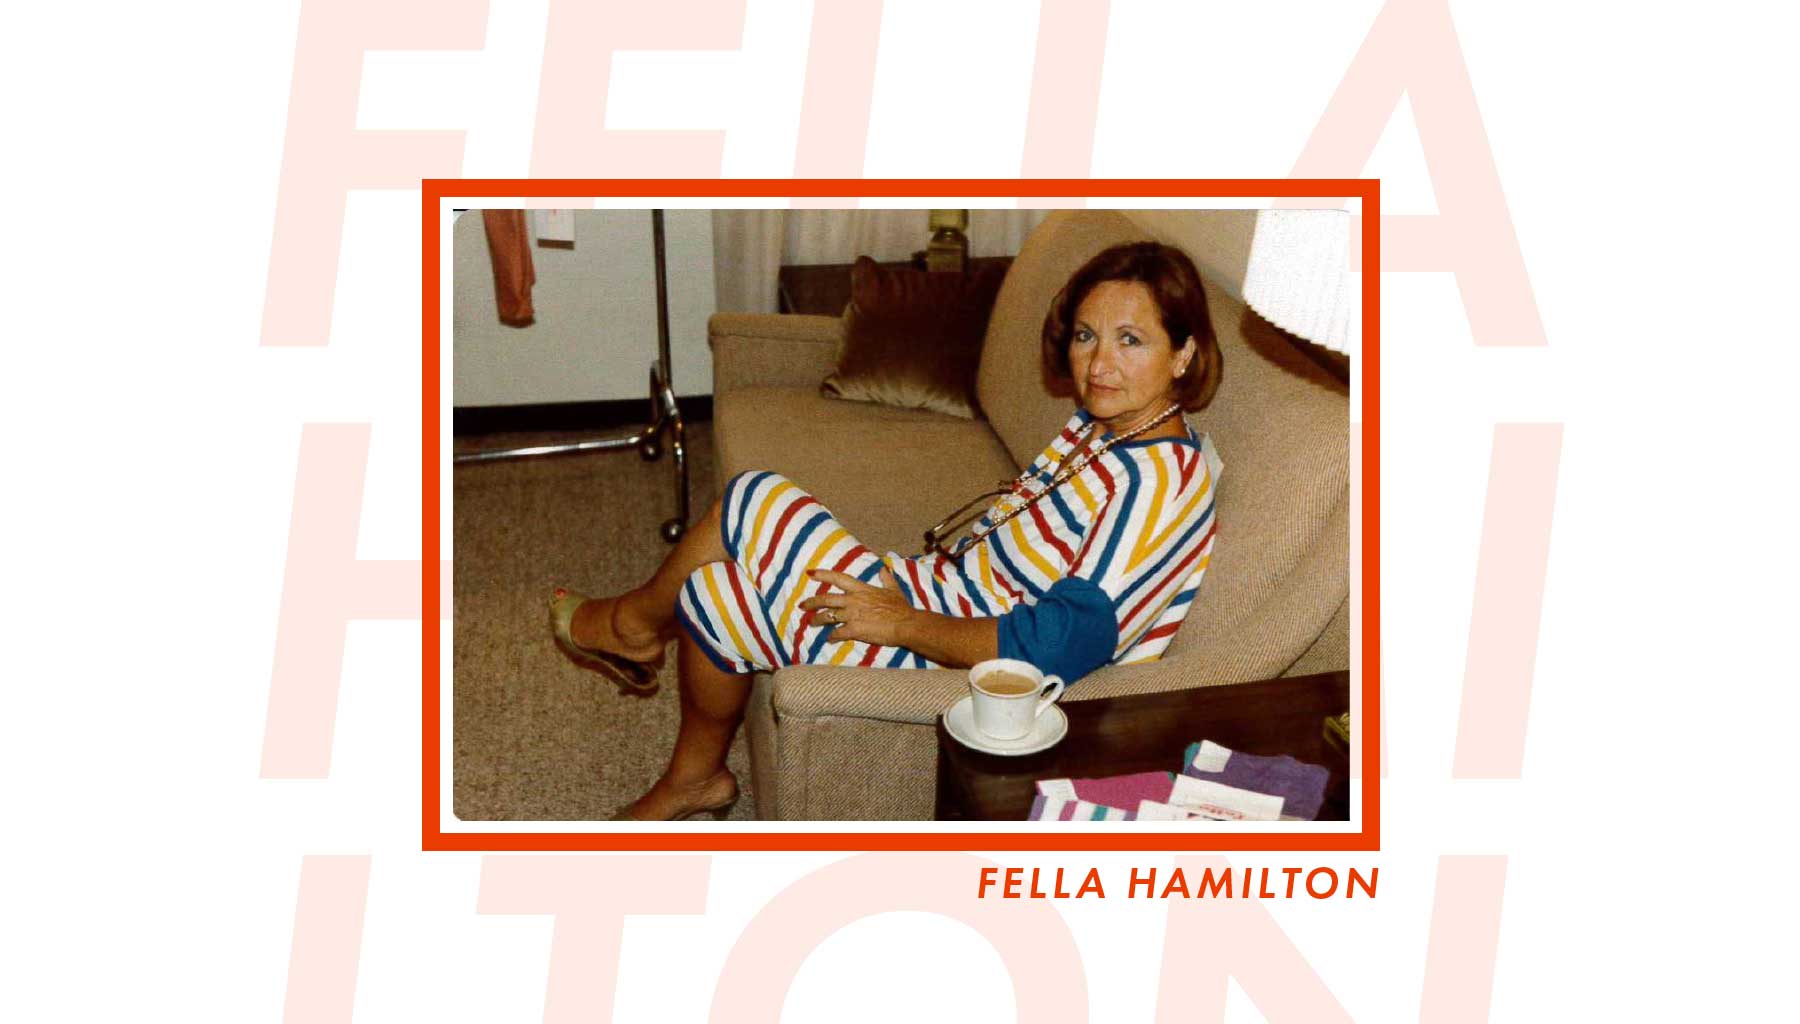 Fella Hamilton sitting down on a couch with a tea.